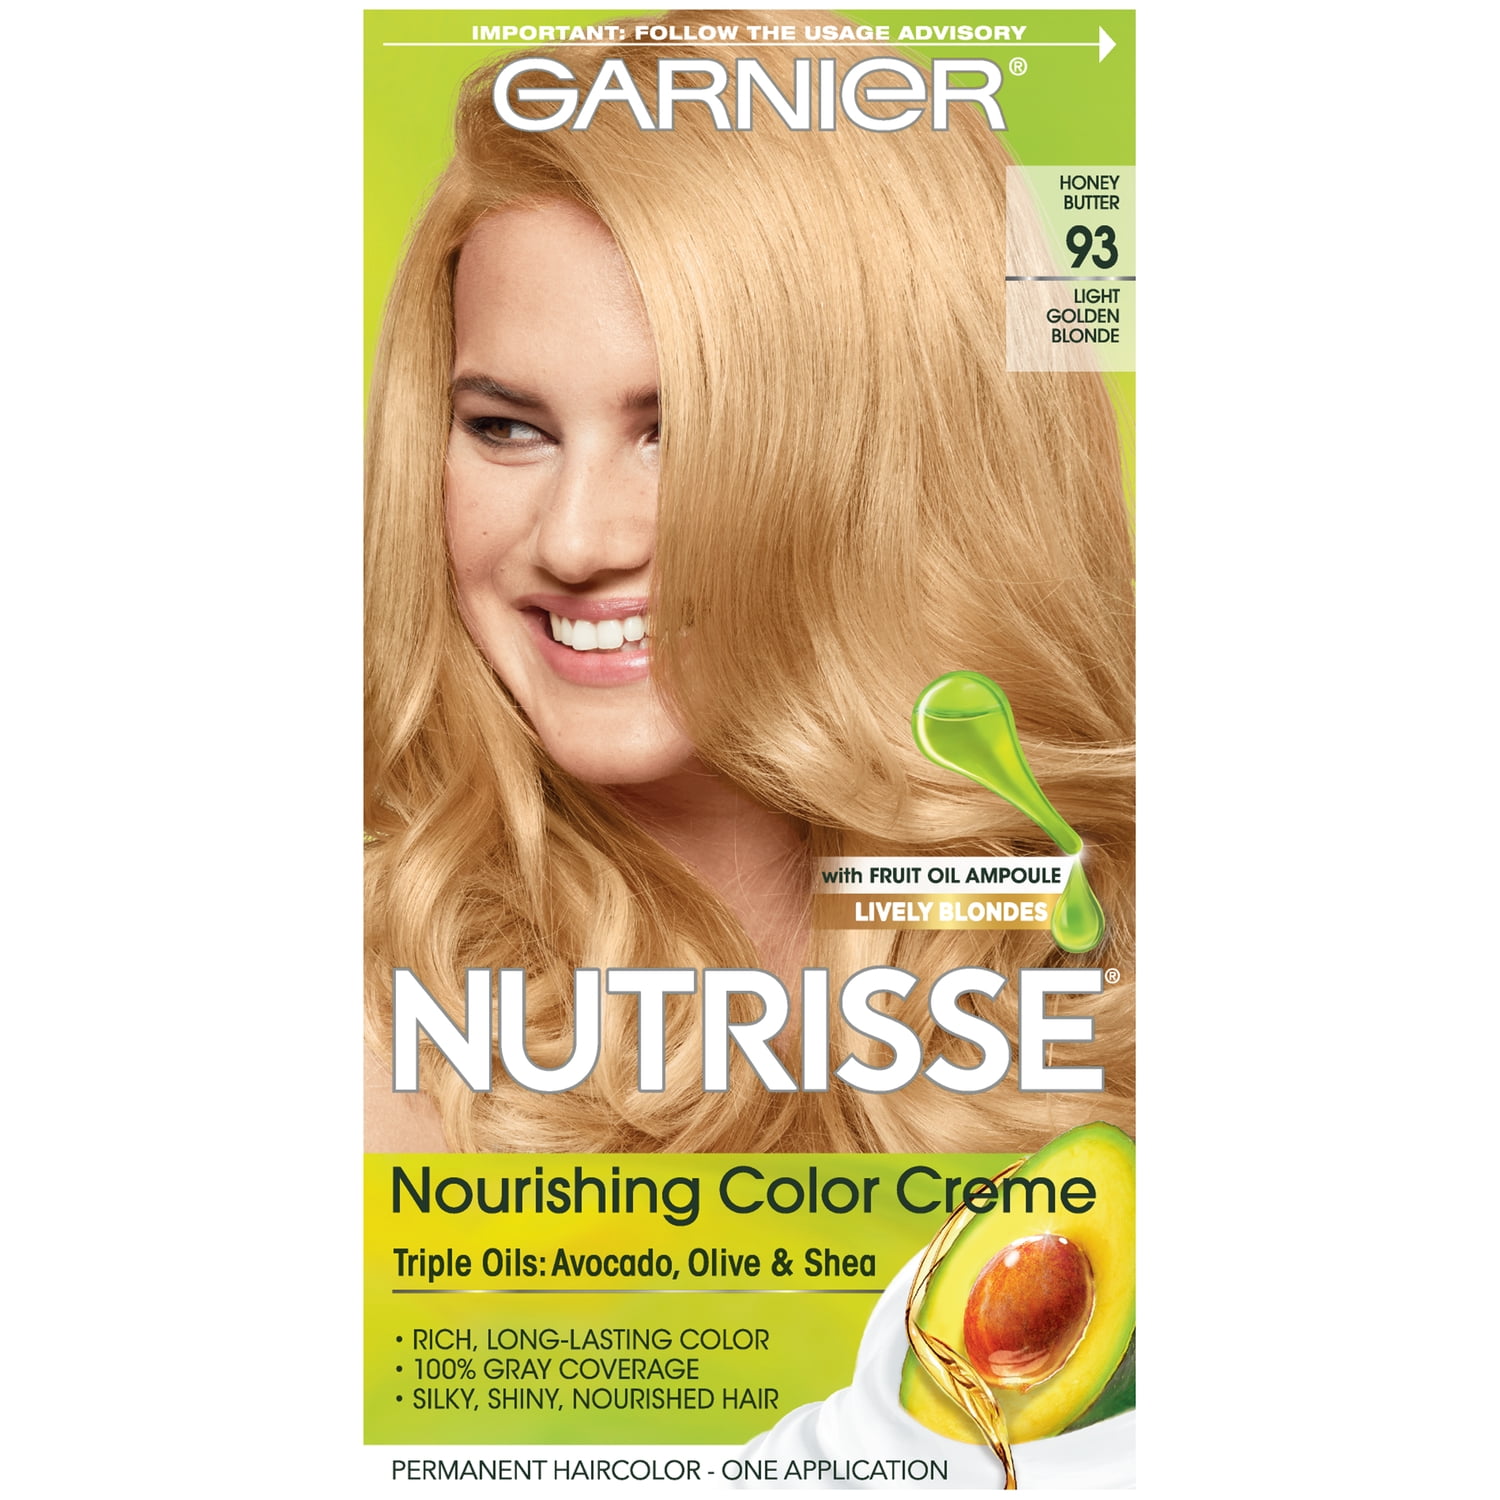 Garnier Nutrisse Nourishing Hair Color Creme, 93 Light Golden Blonde (Honey  Butter), 1 Kit - Walmart.com